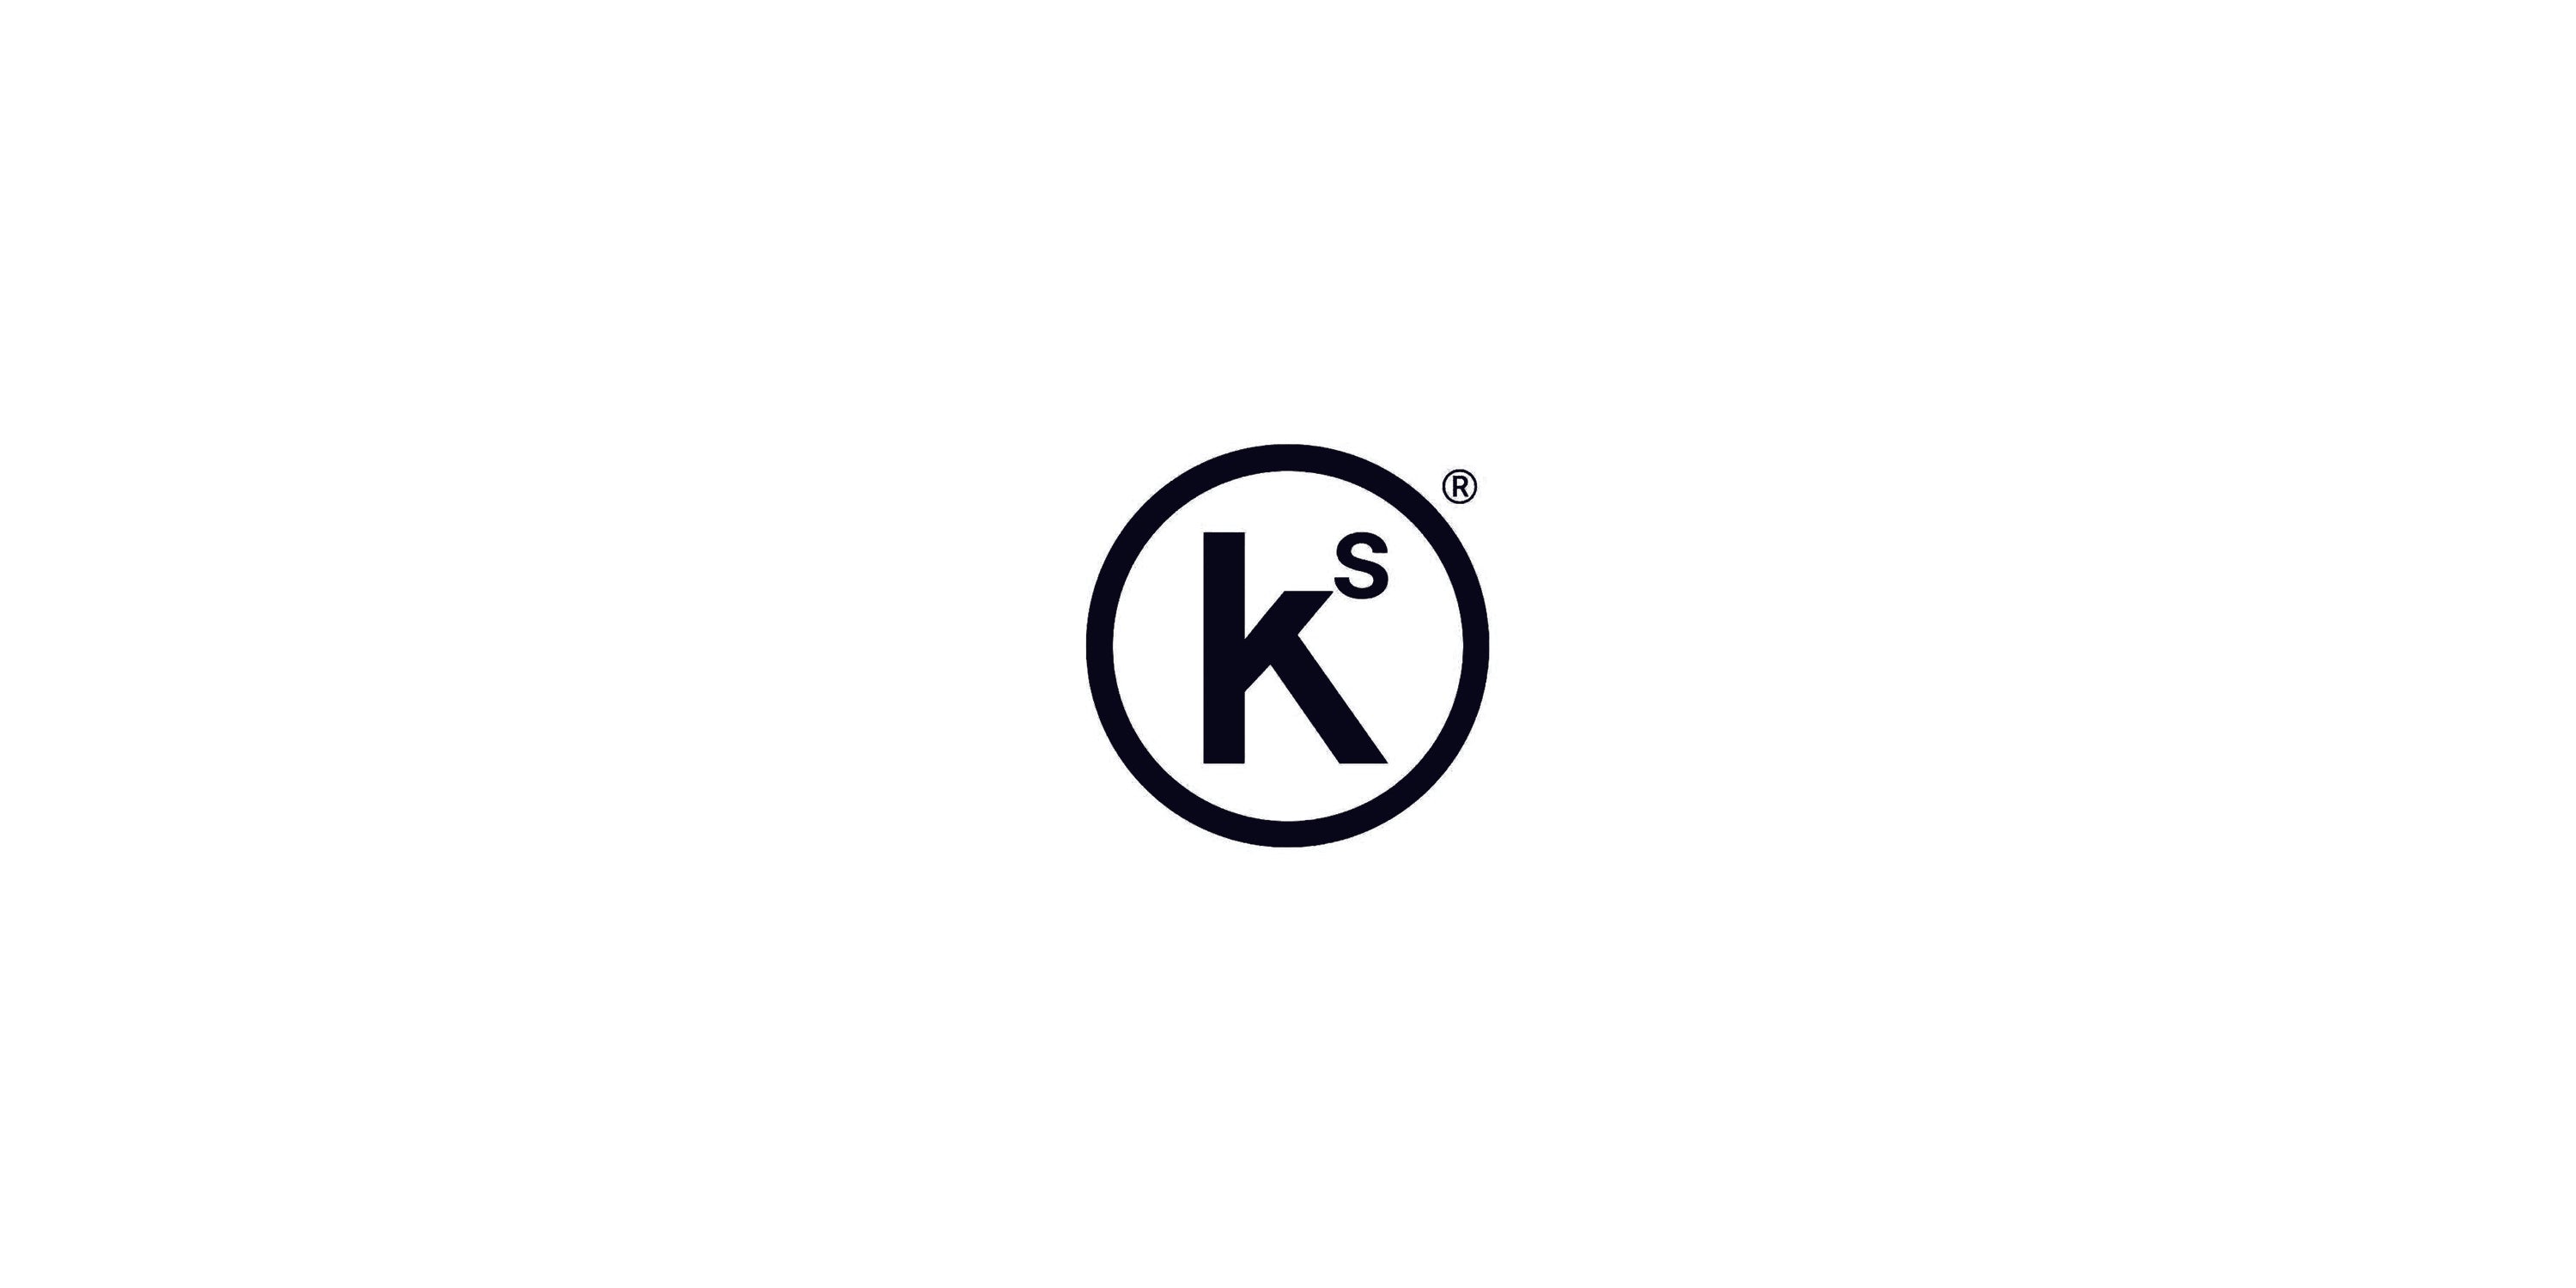 Khachik.s logo